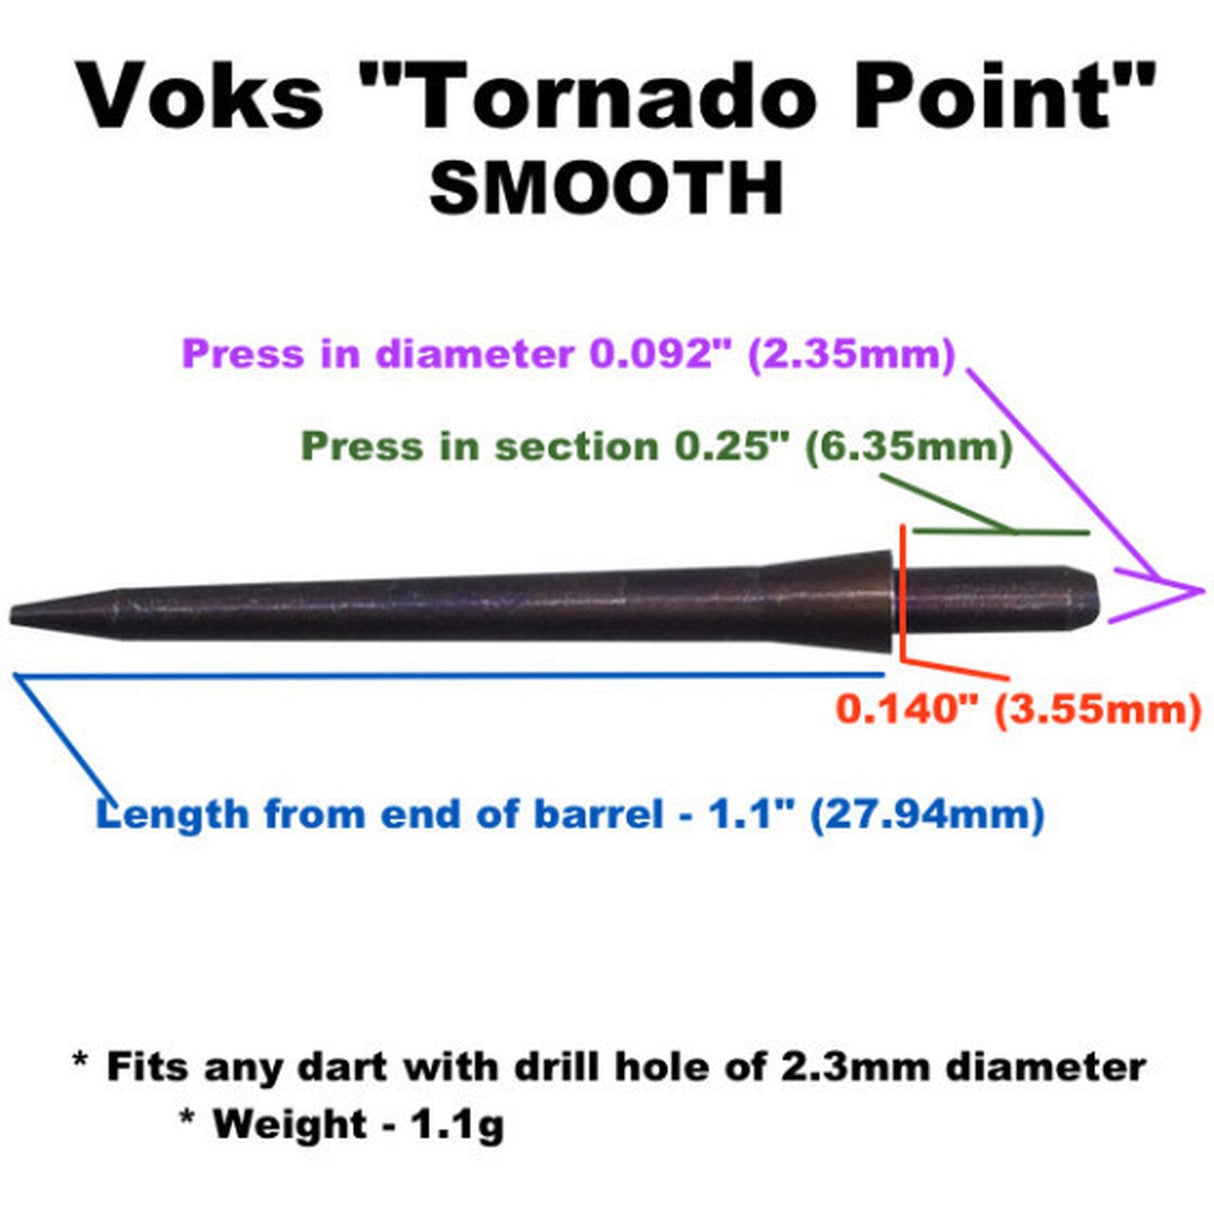 Voks metal smooth tornado replacement dart points